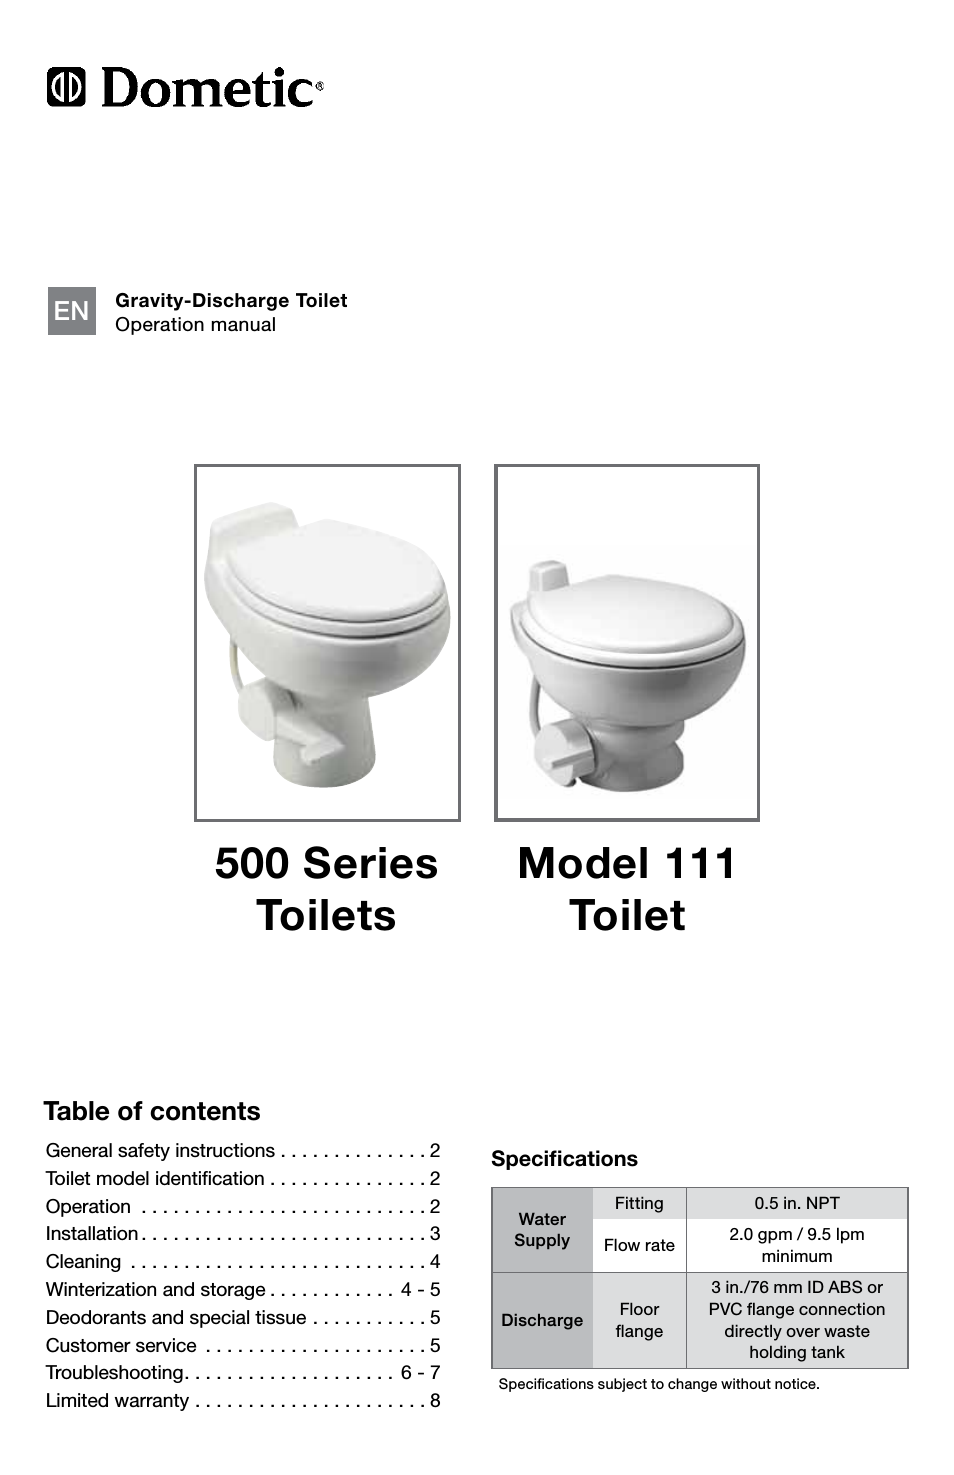 500 Series Toilets